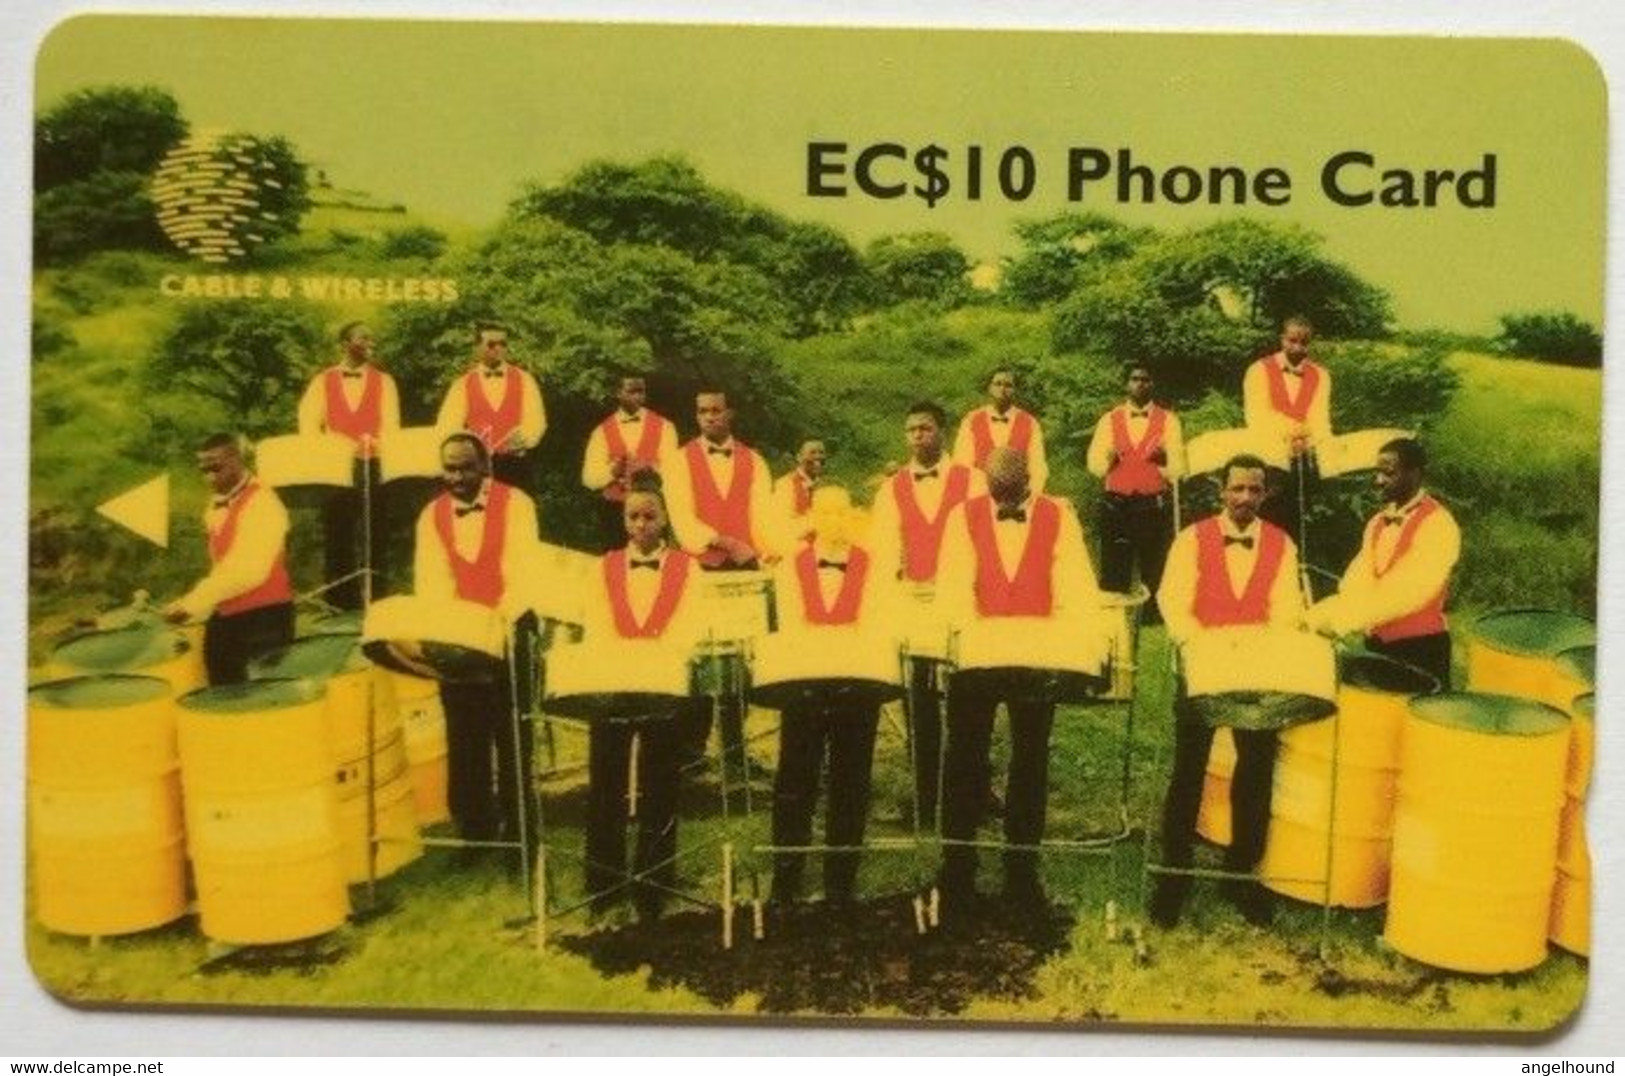 Grenada Cable And Wireless EC$10 255CGRA "Band ( Formerly Grentel Commancheros)" - Grenada (Granada)